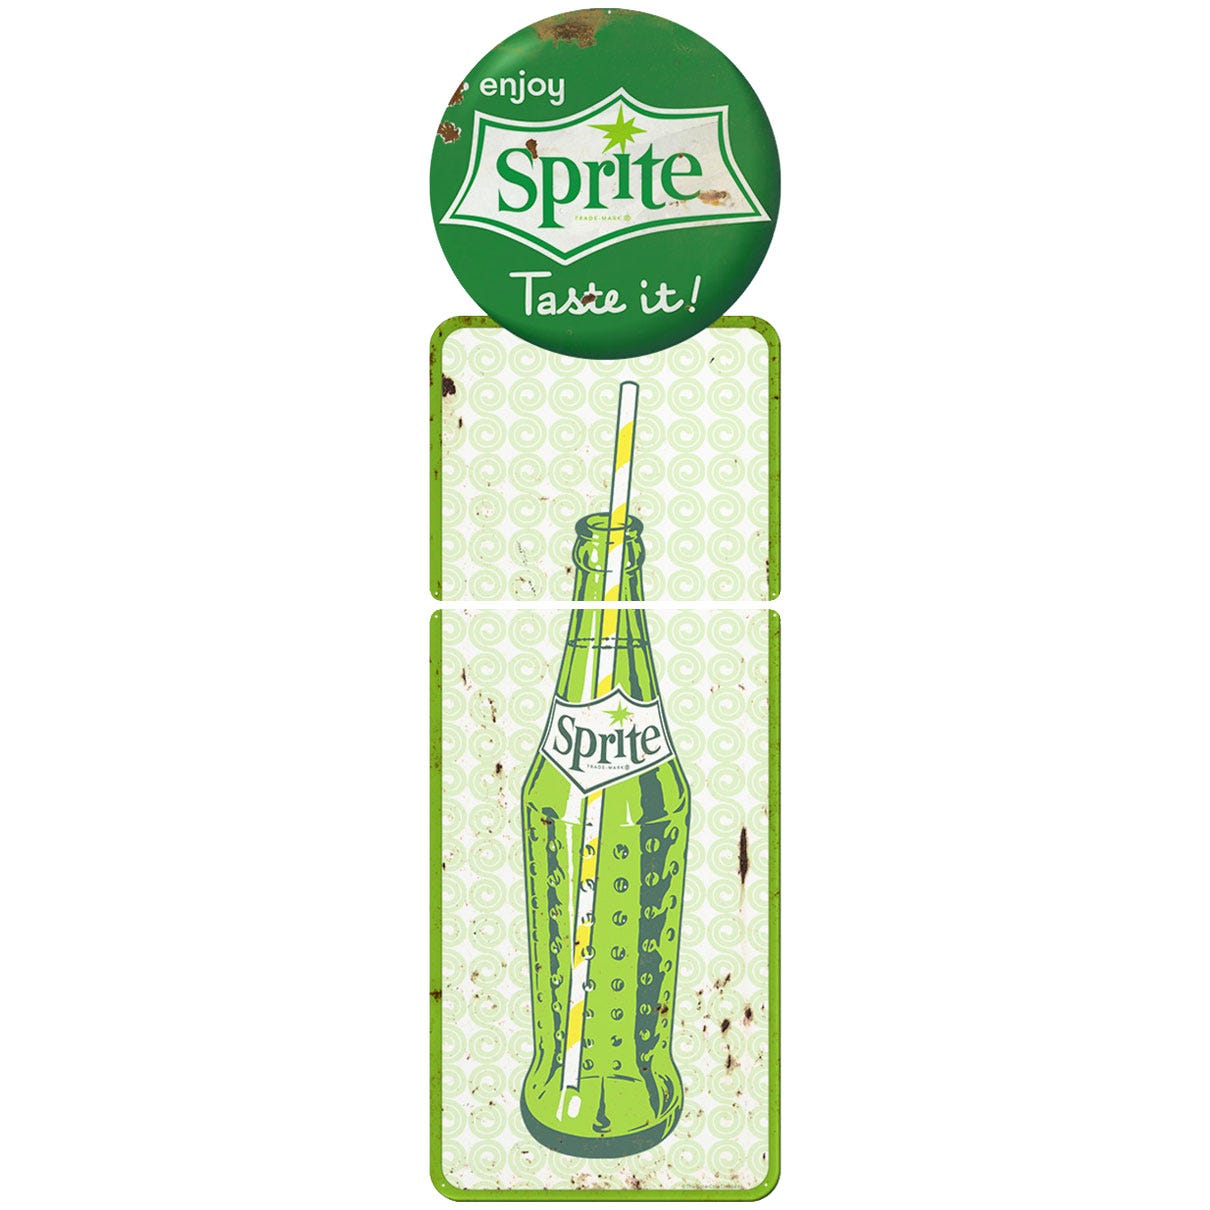 Image result for sprite green bottle history